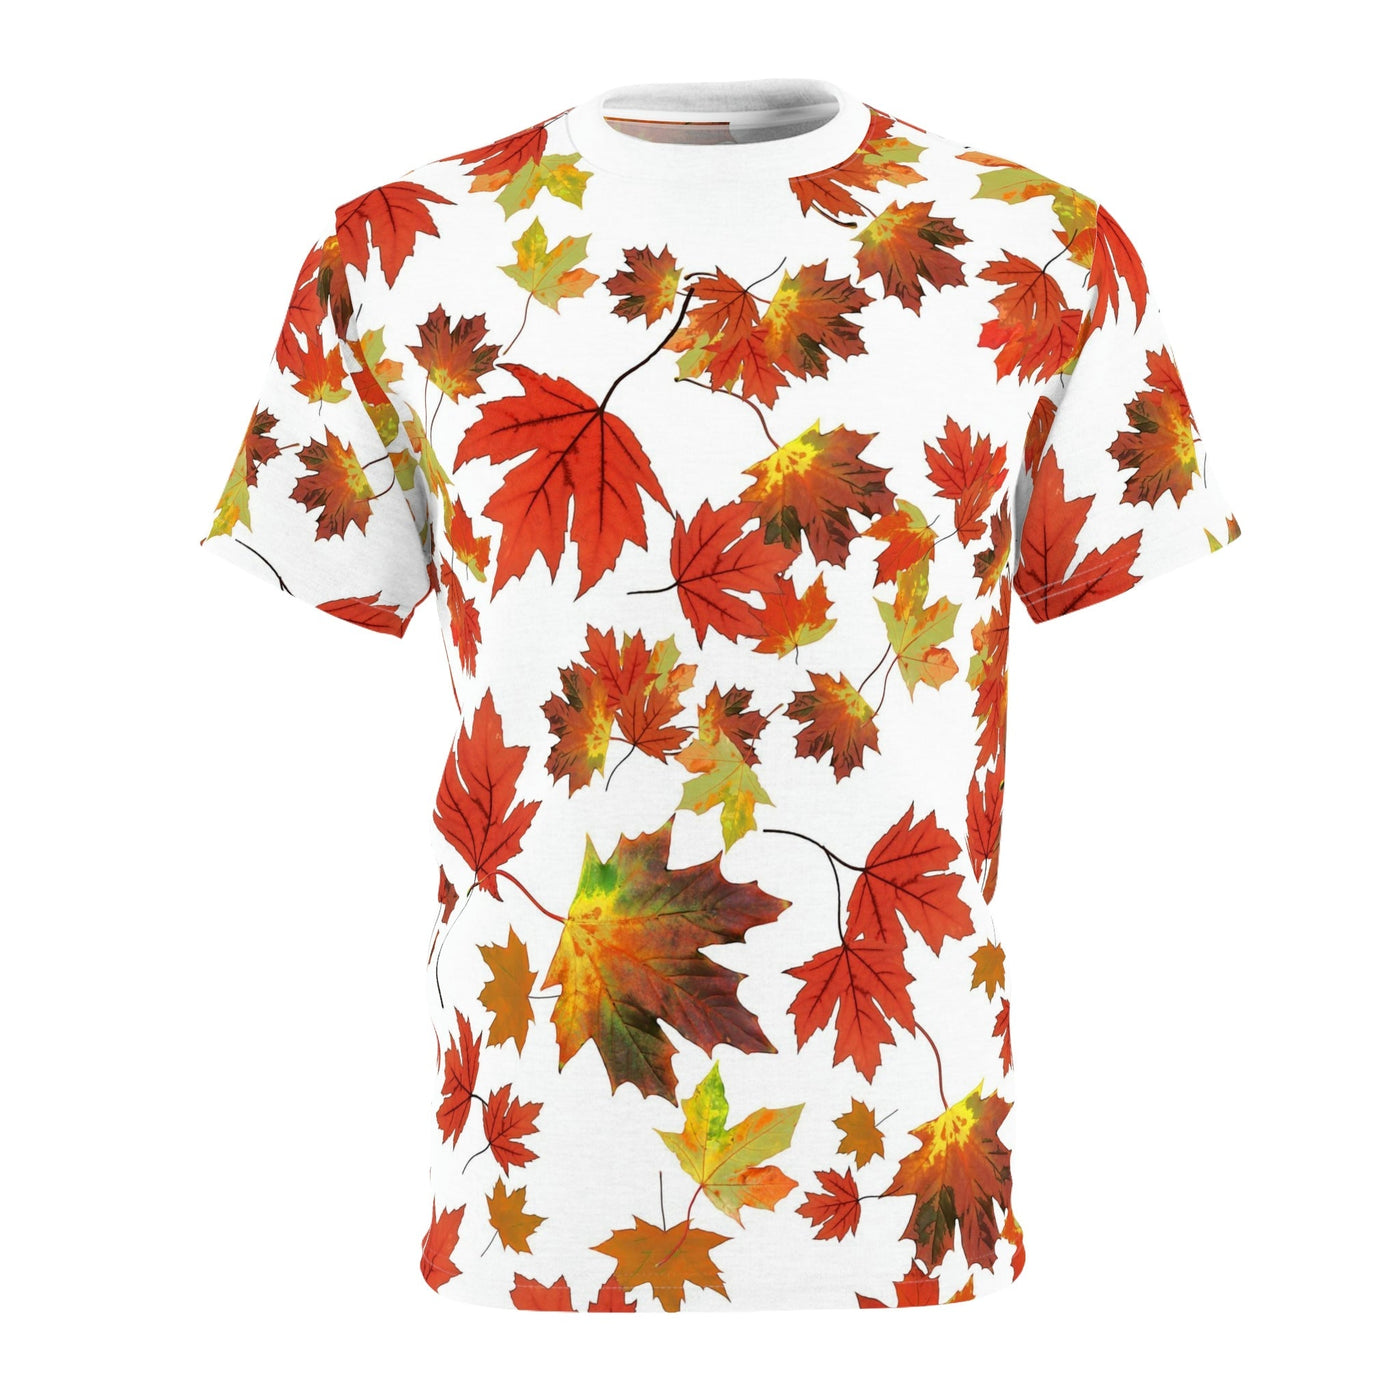 tyler durden maple leaf shirt Graphic T-Shirt for Sale by timyewest